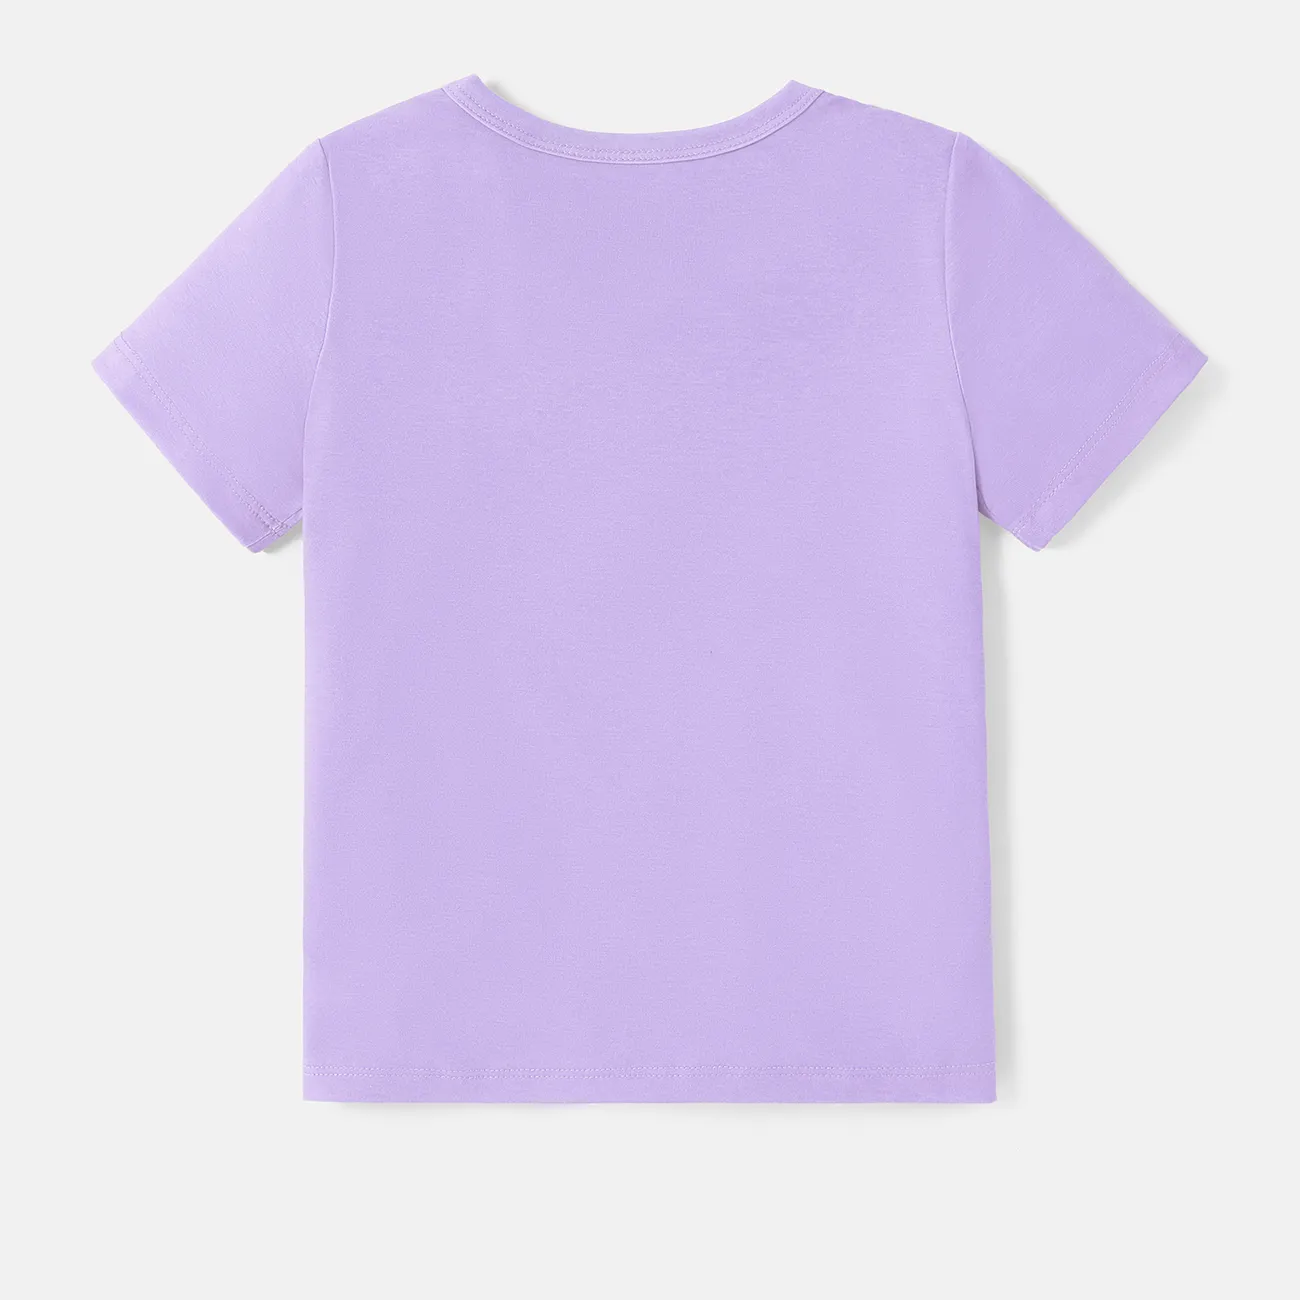 Disney Mickey and Friends Toddler/Kid Girl/Boy Character Print Naia™ Short-sleeve Tee Light Purple big image 1